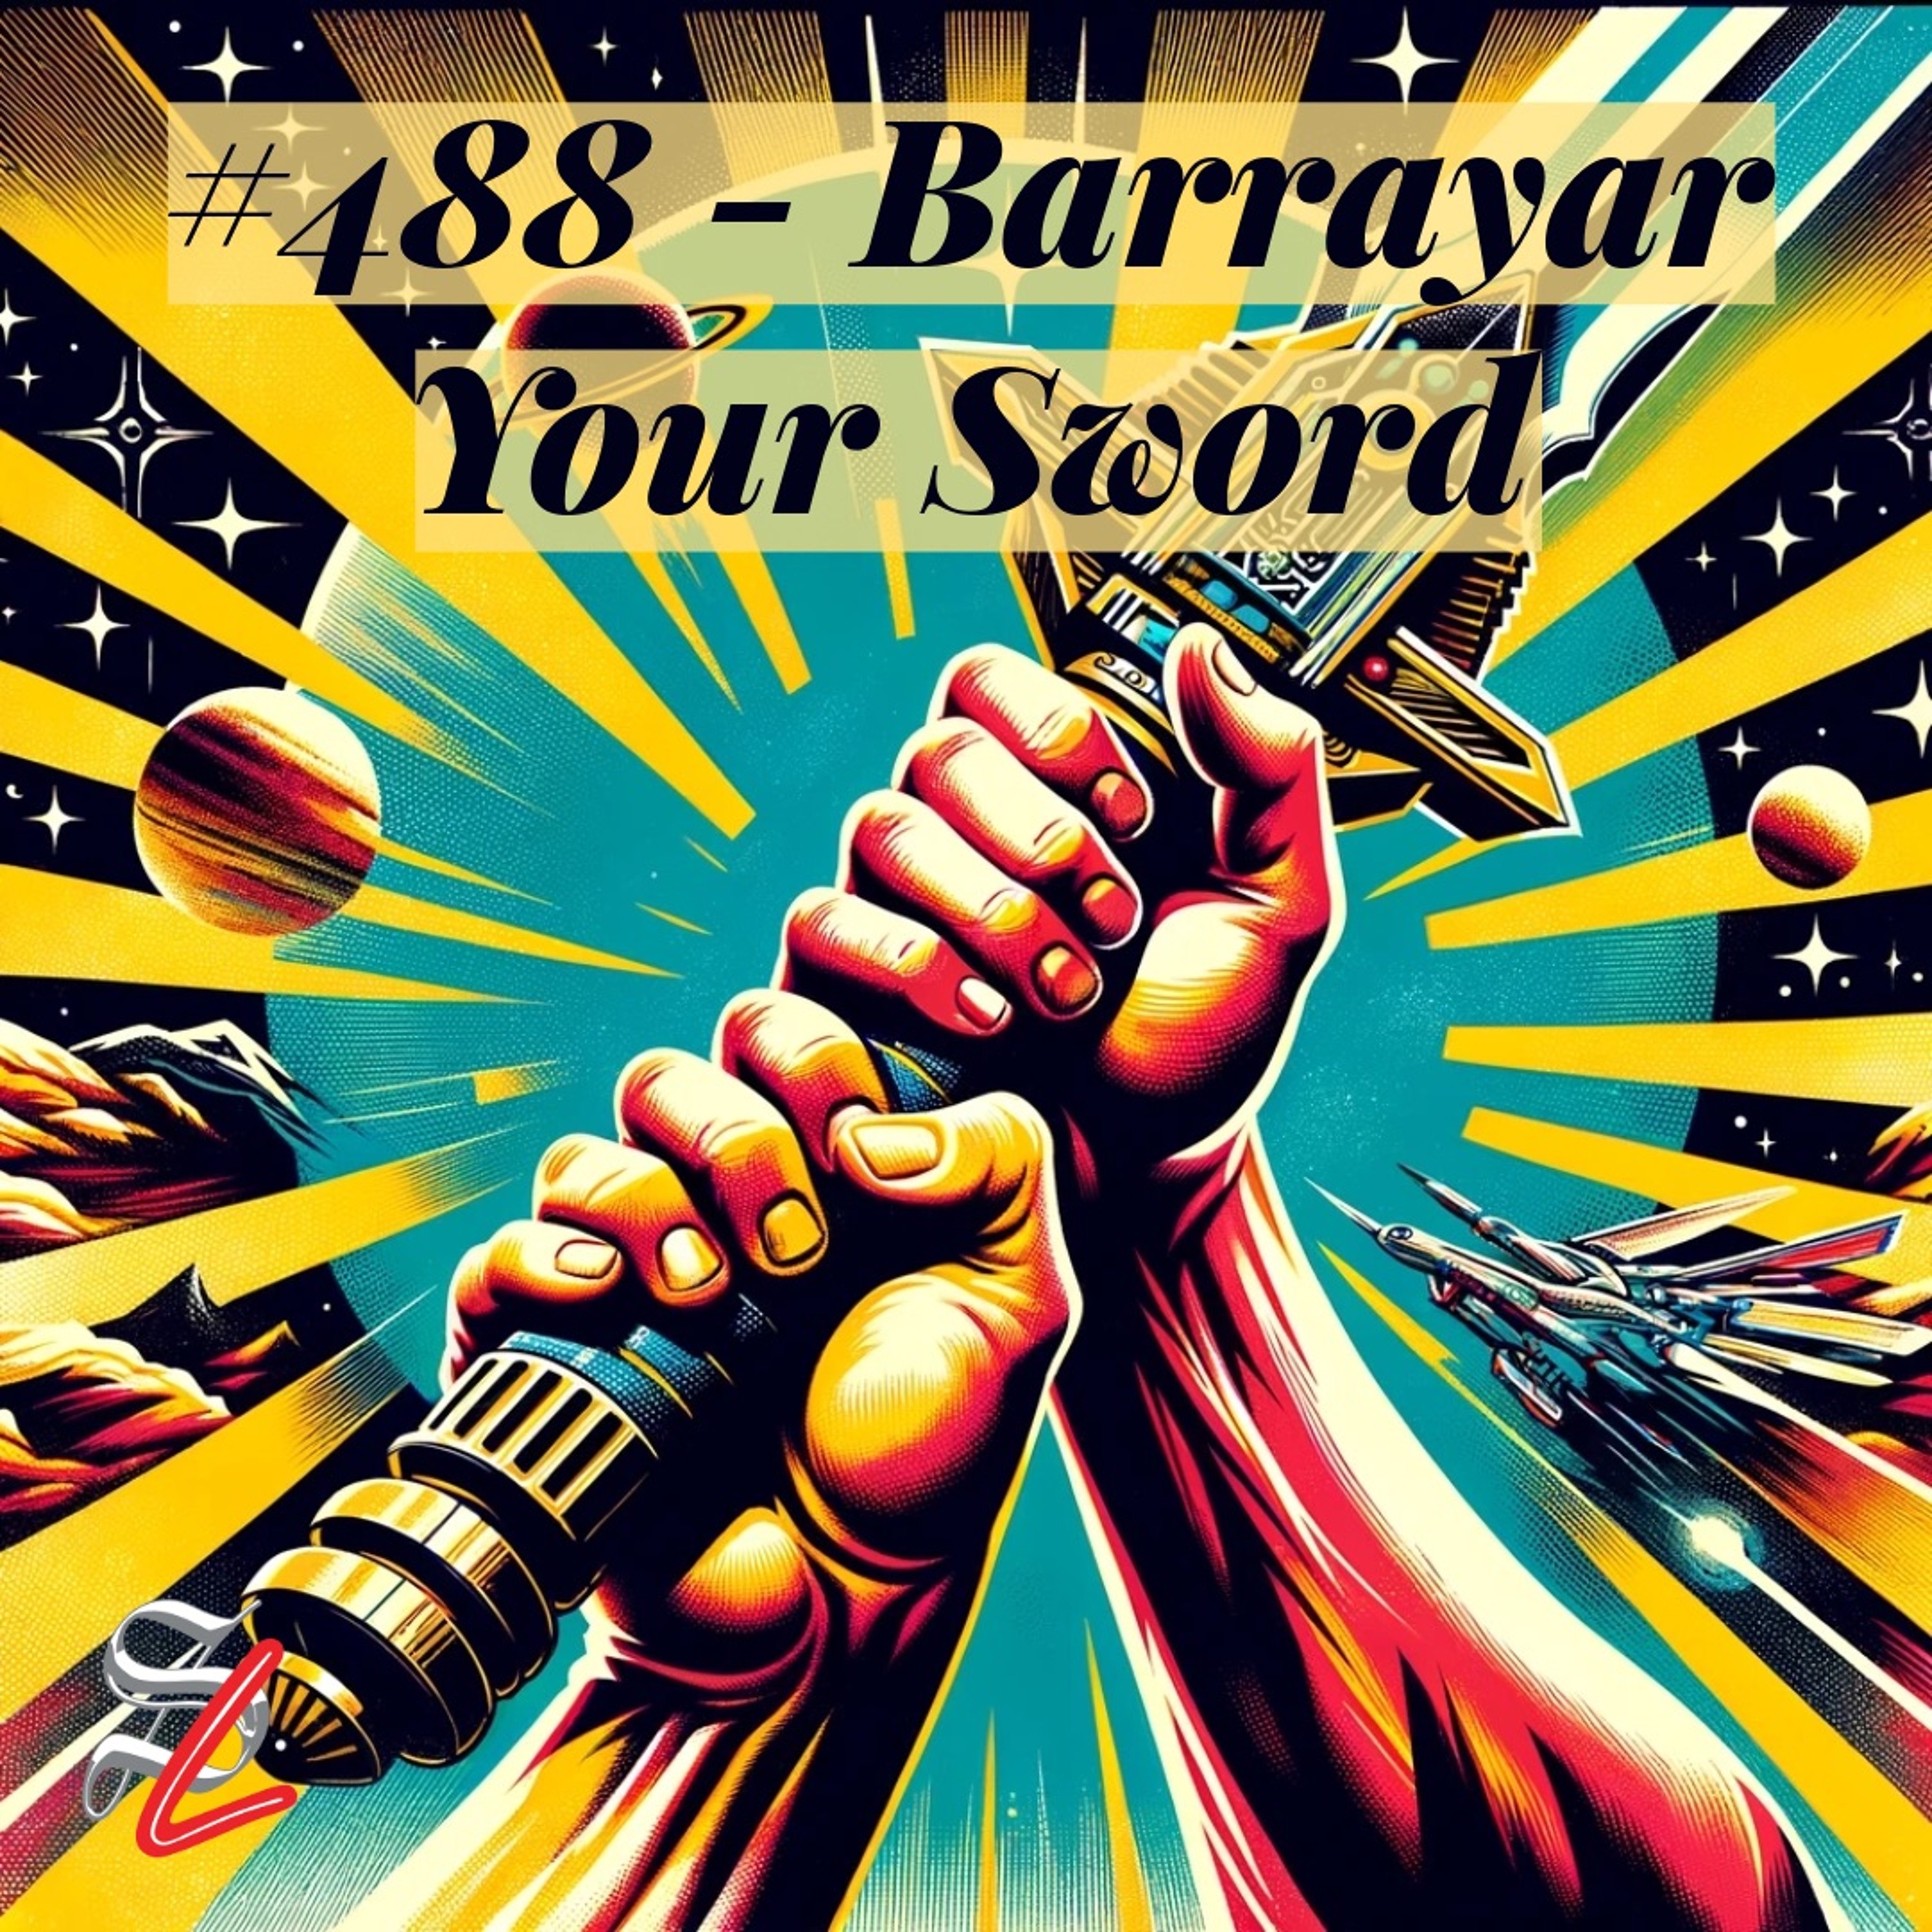 #488 - Barrayar Your Sword